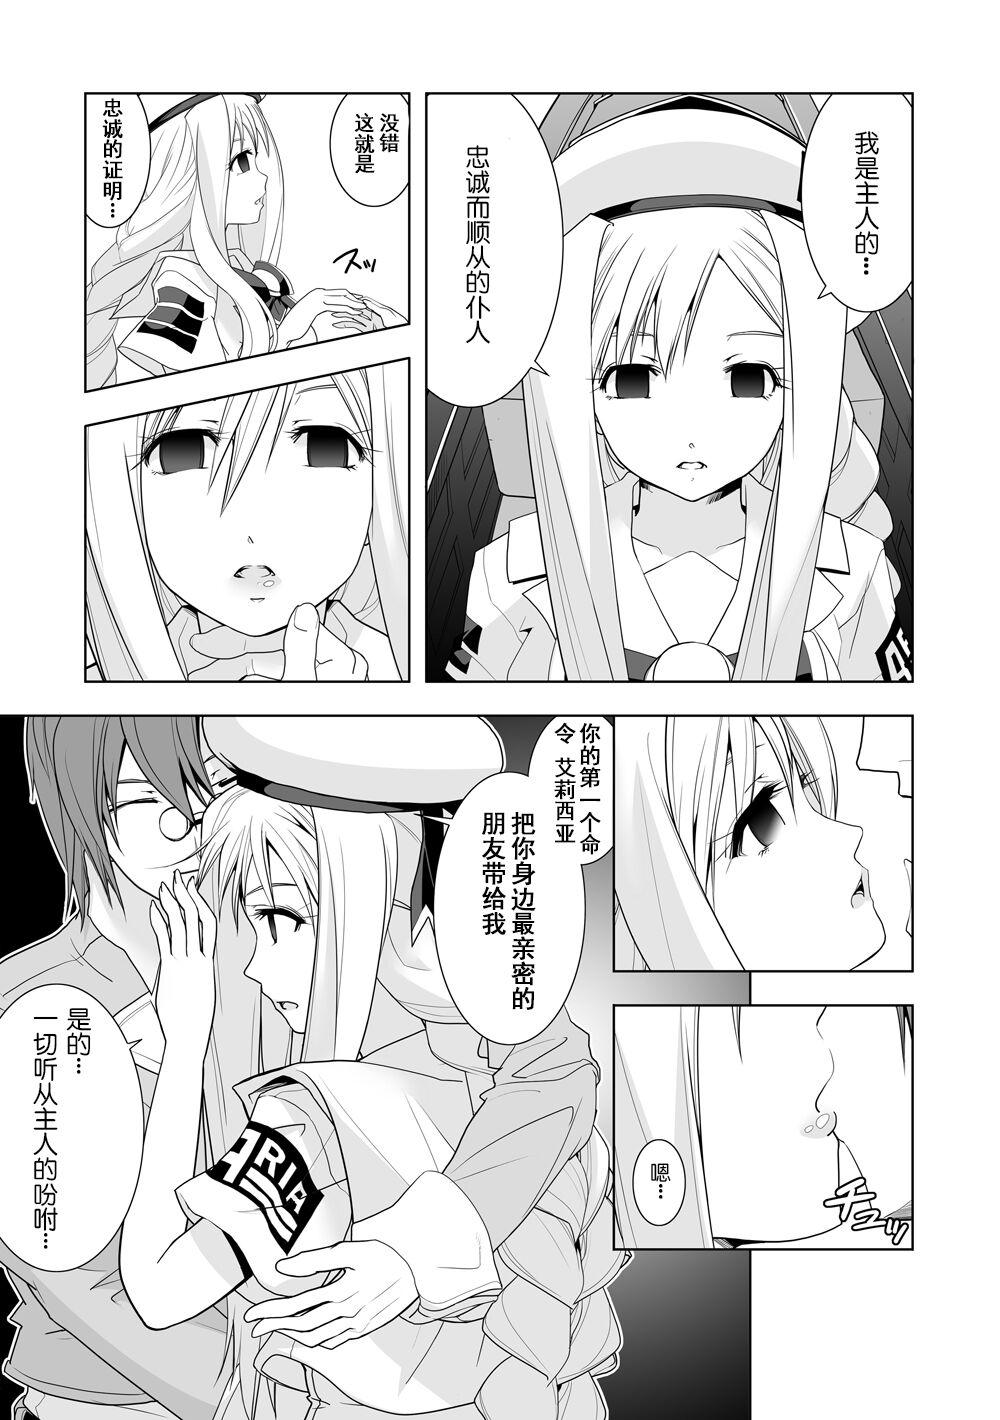 Weird AR*A Mind-control Manga - Aria Amigos - Page 3